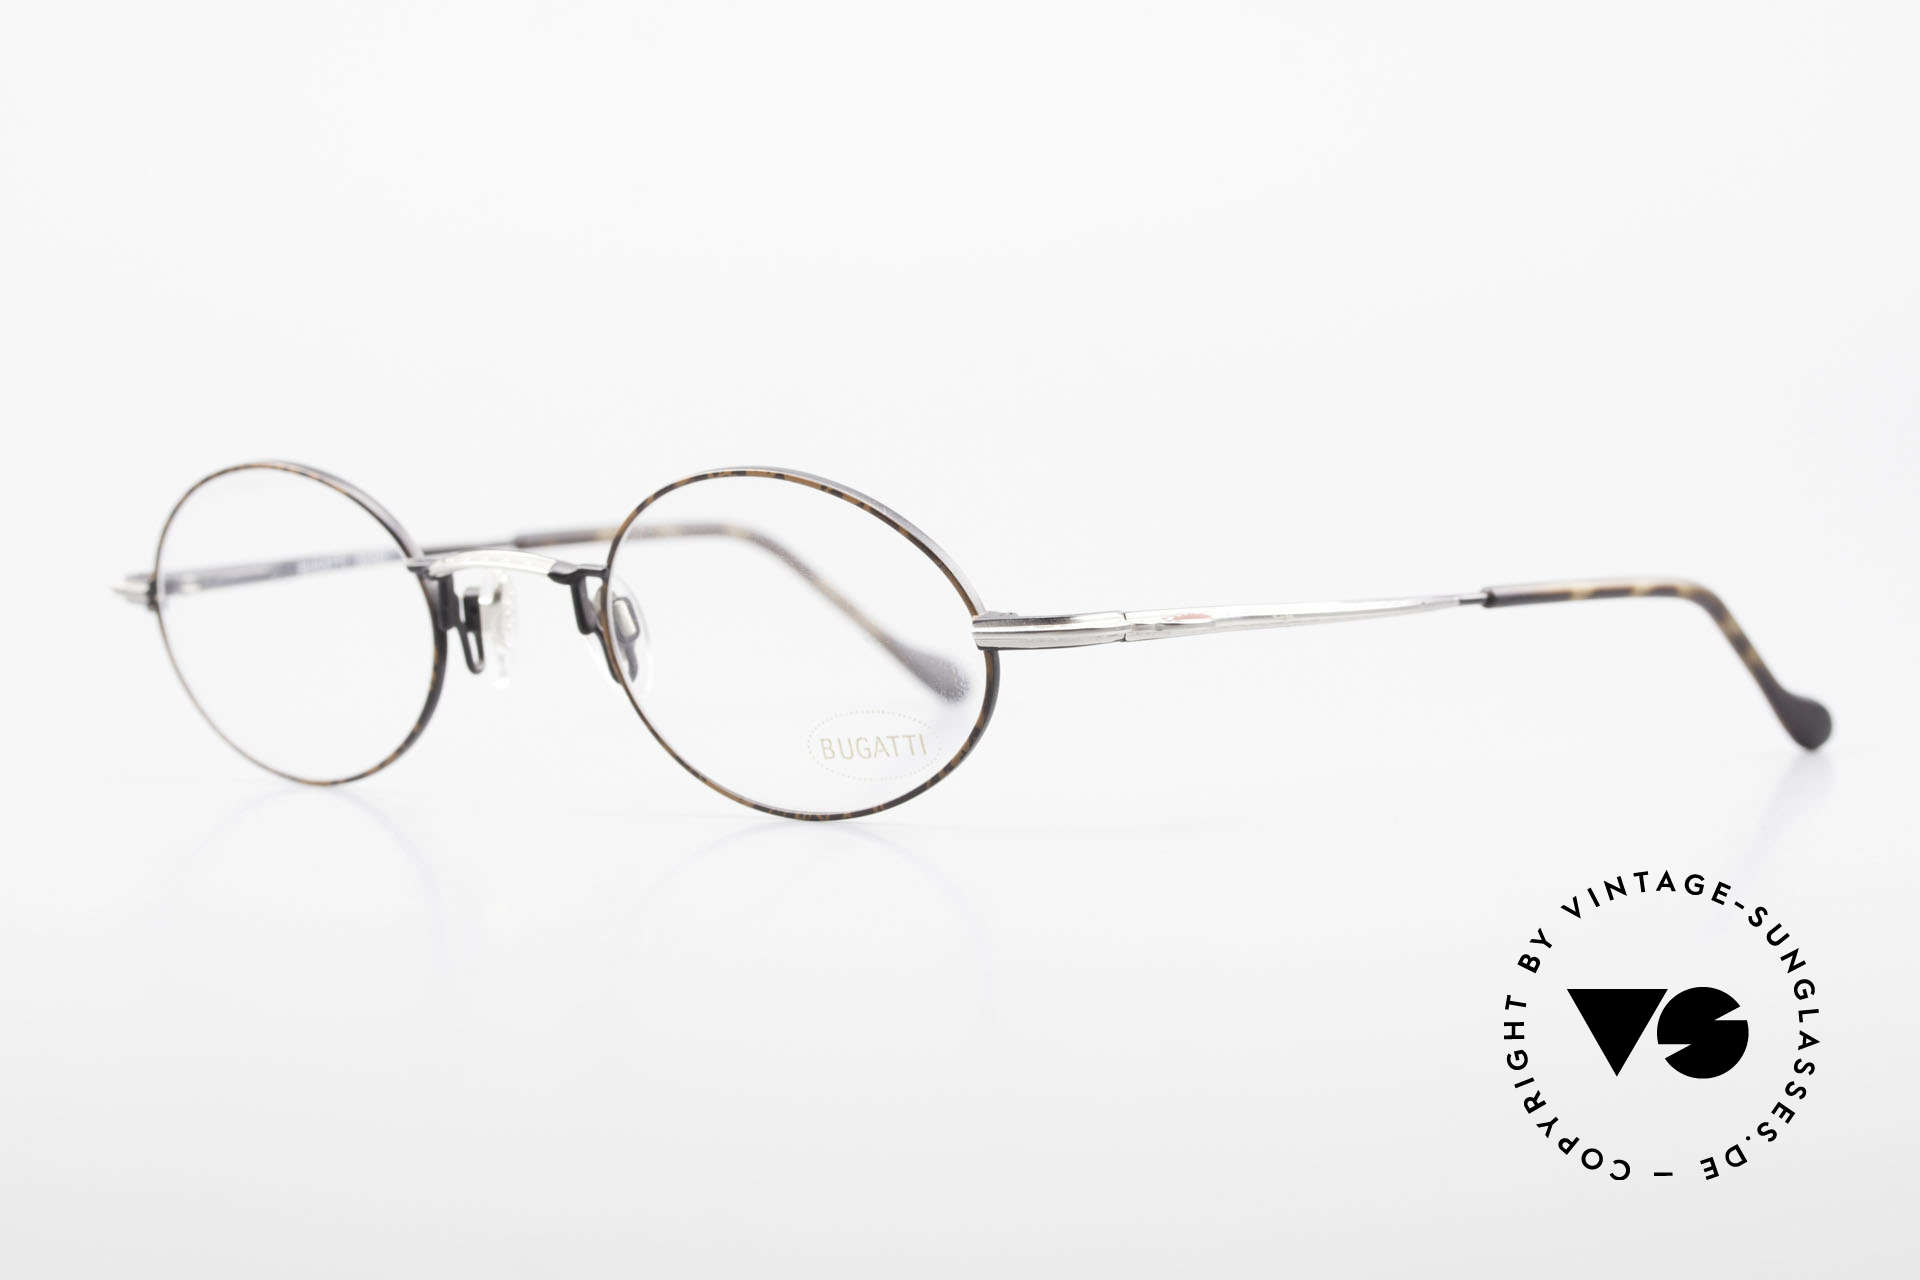 Bugatti 23191 Oval Luxury Eyeglass-Frame, made around 1995 in France; premium craftsmanship, Made for Men